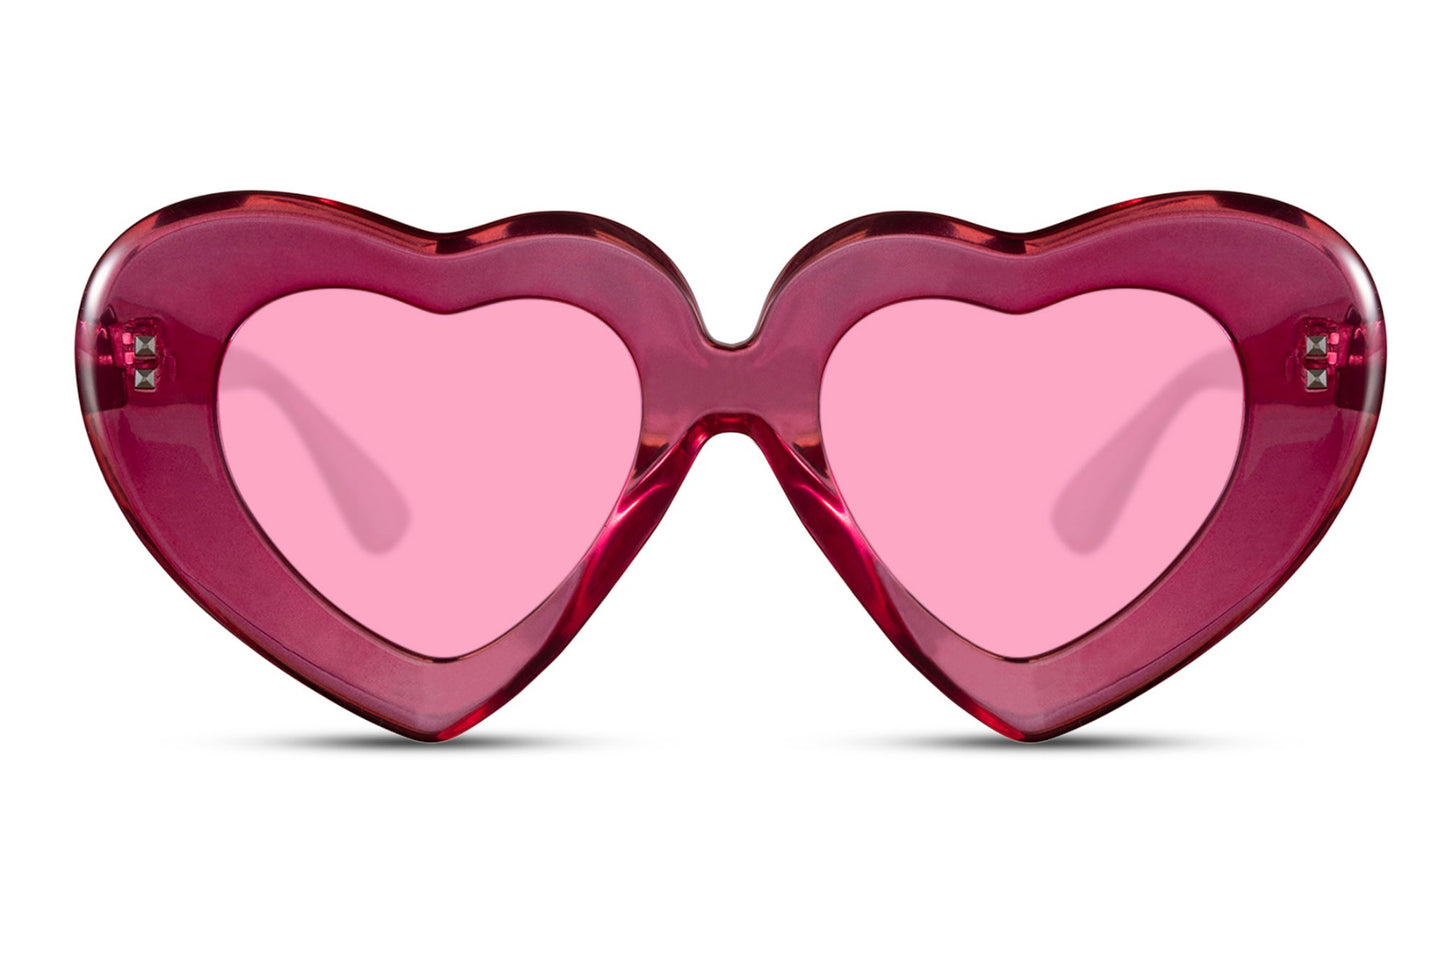 Heart Shape Party Sunglasses - Eco friendly